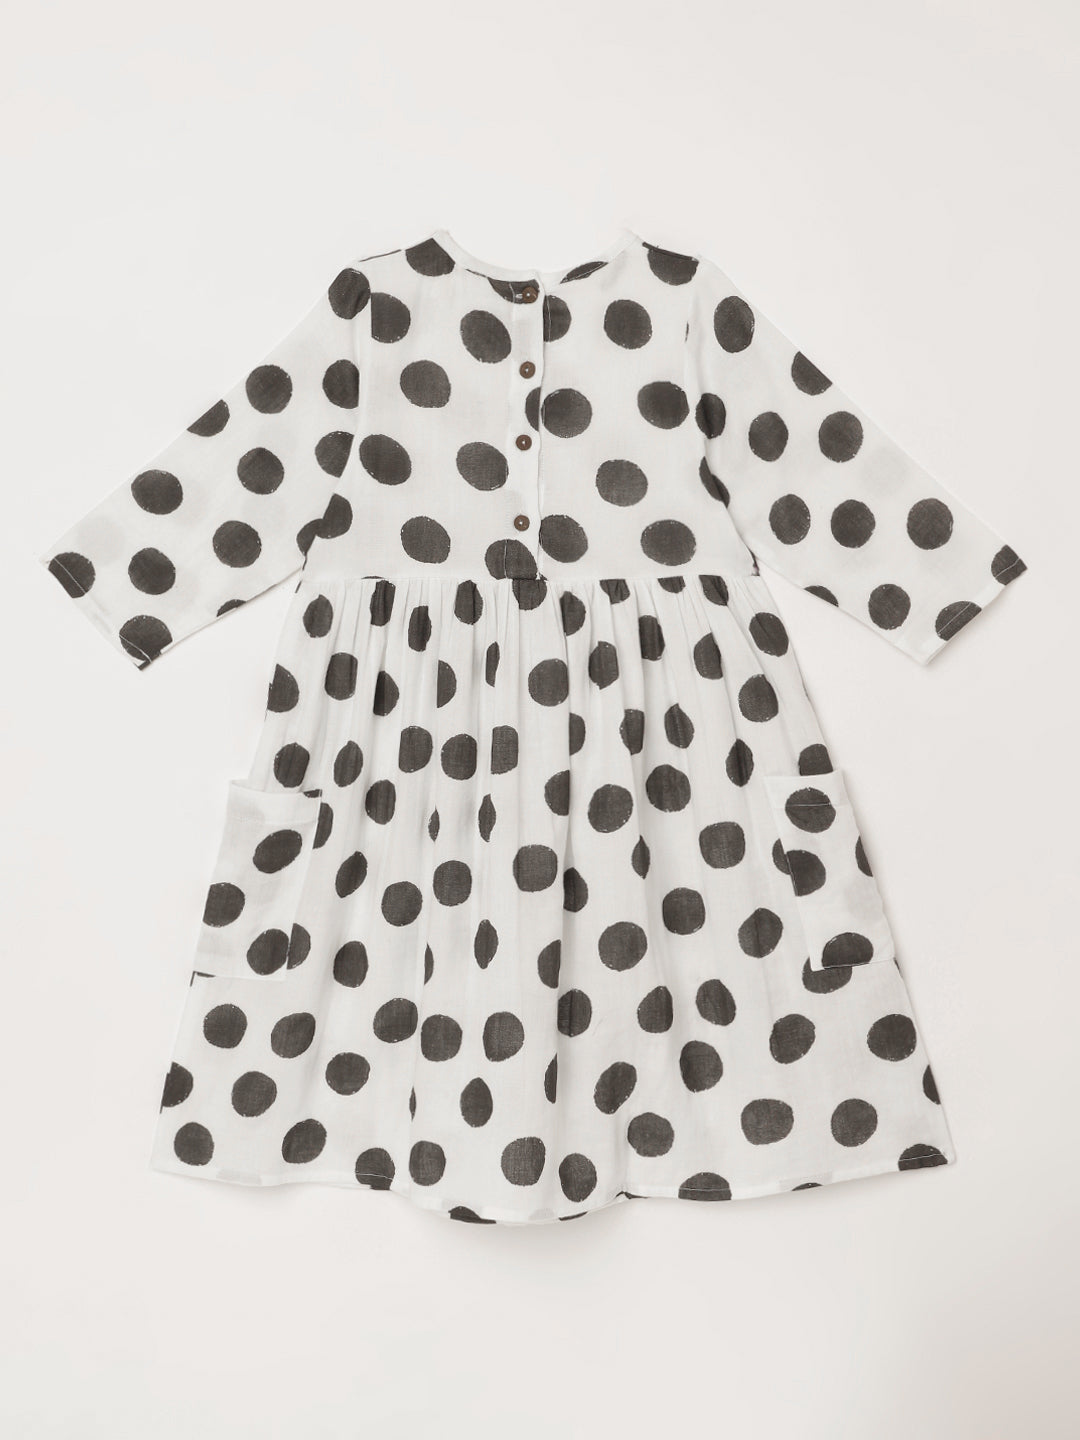 Polka Dot Cotton knee length dress for girls 1yr to 8  yrs - Back